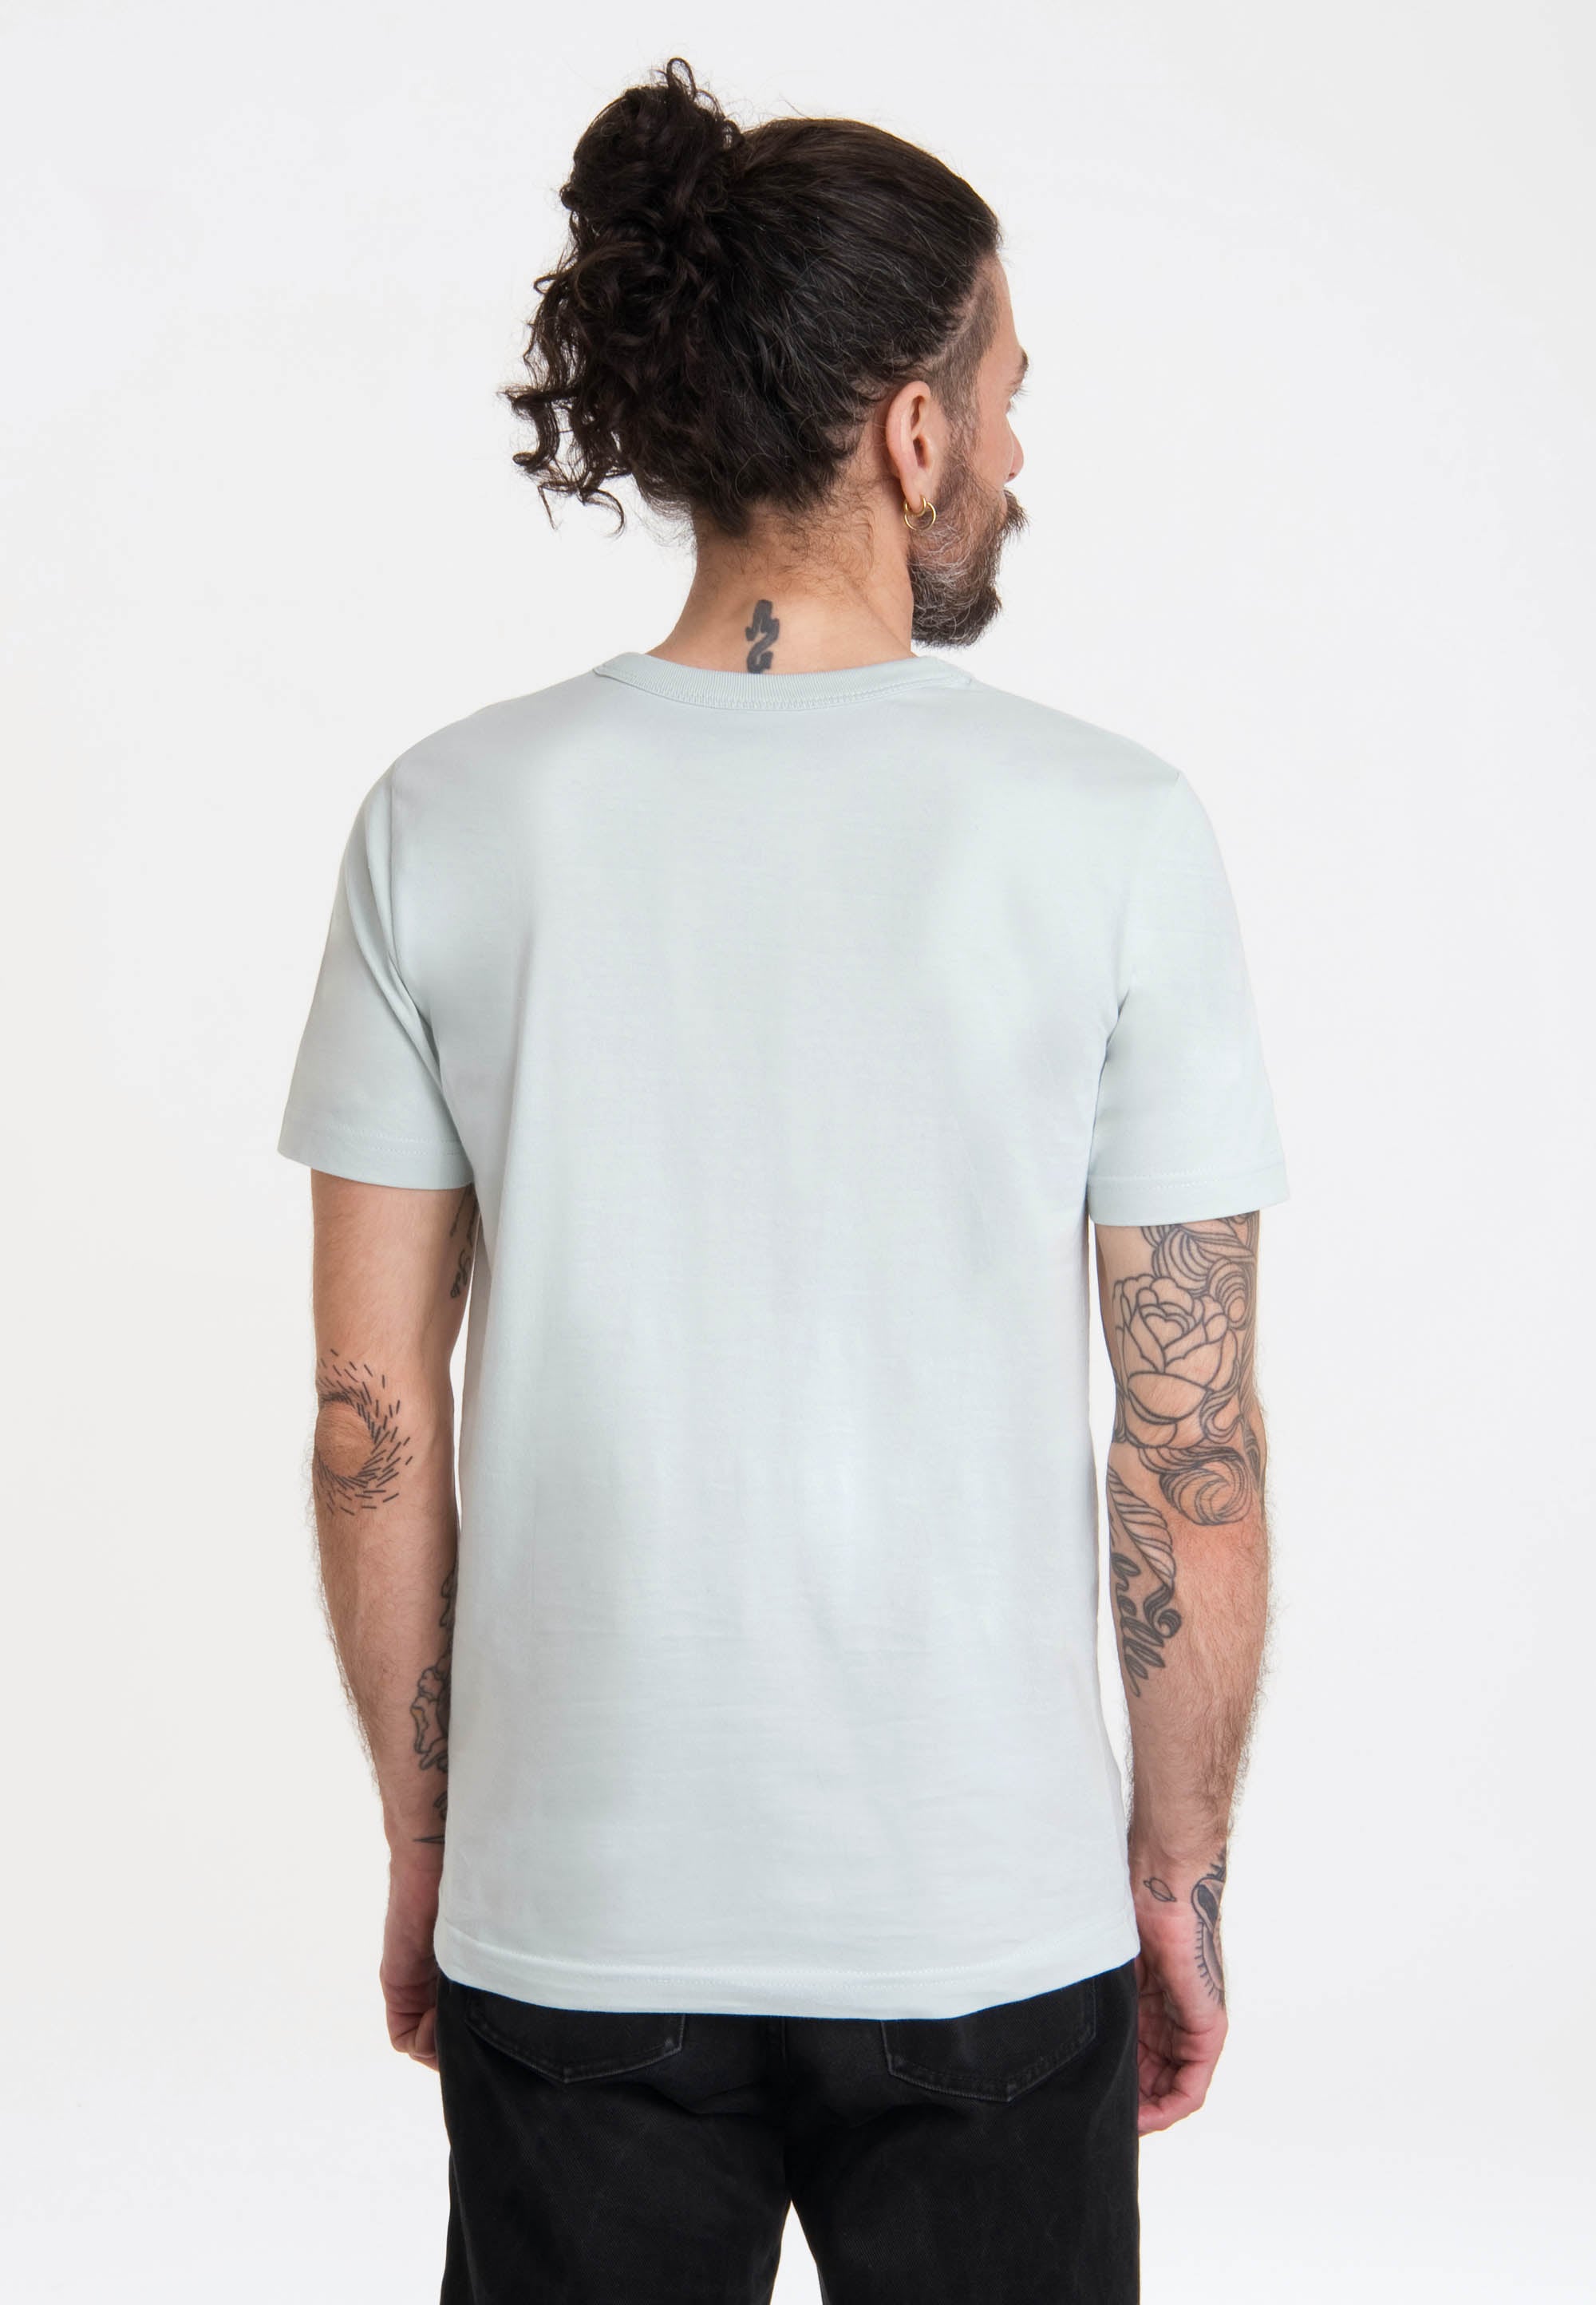 LOGOSHIRT T-Shirt »Lucky Luke«, mit angesagtem Retro-Print ▷ kaufen | BAUR